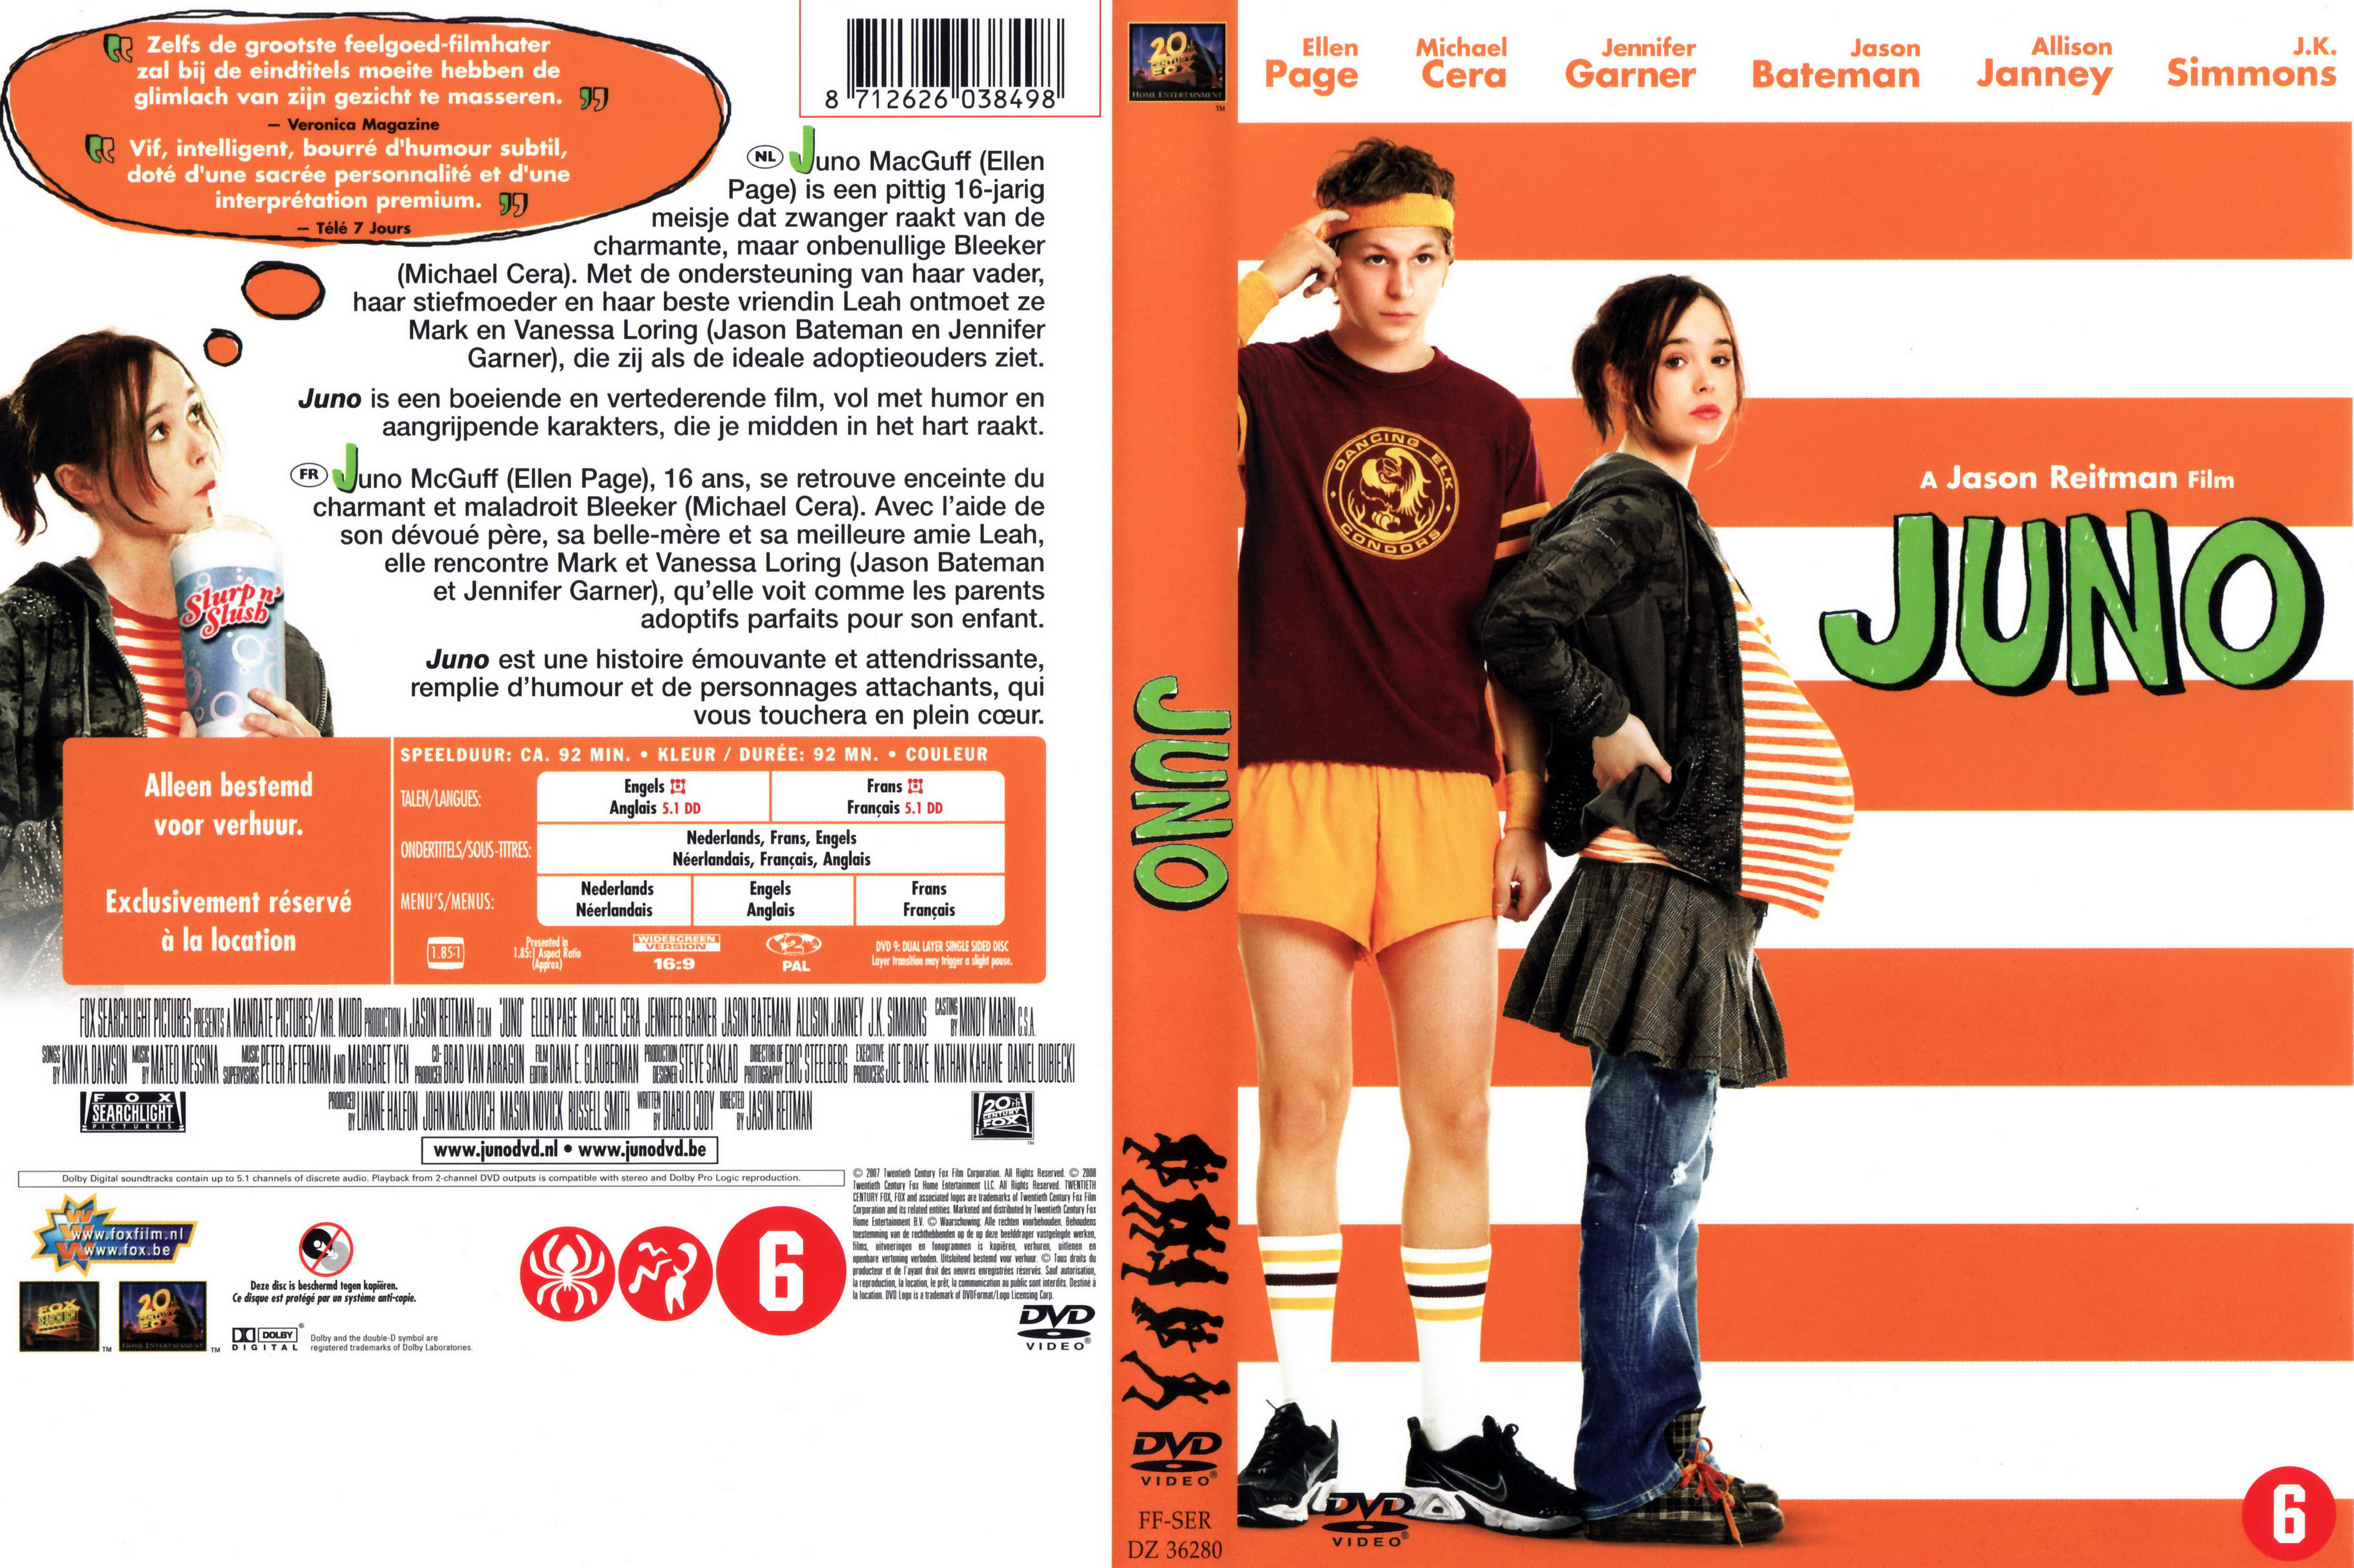 Jaquette DVD Juno v2